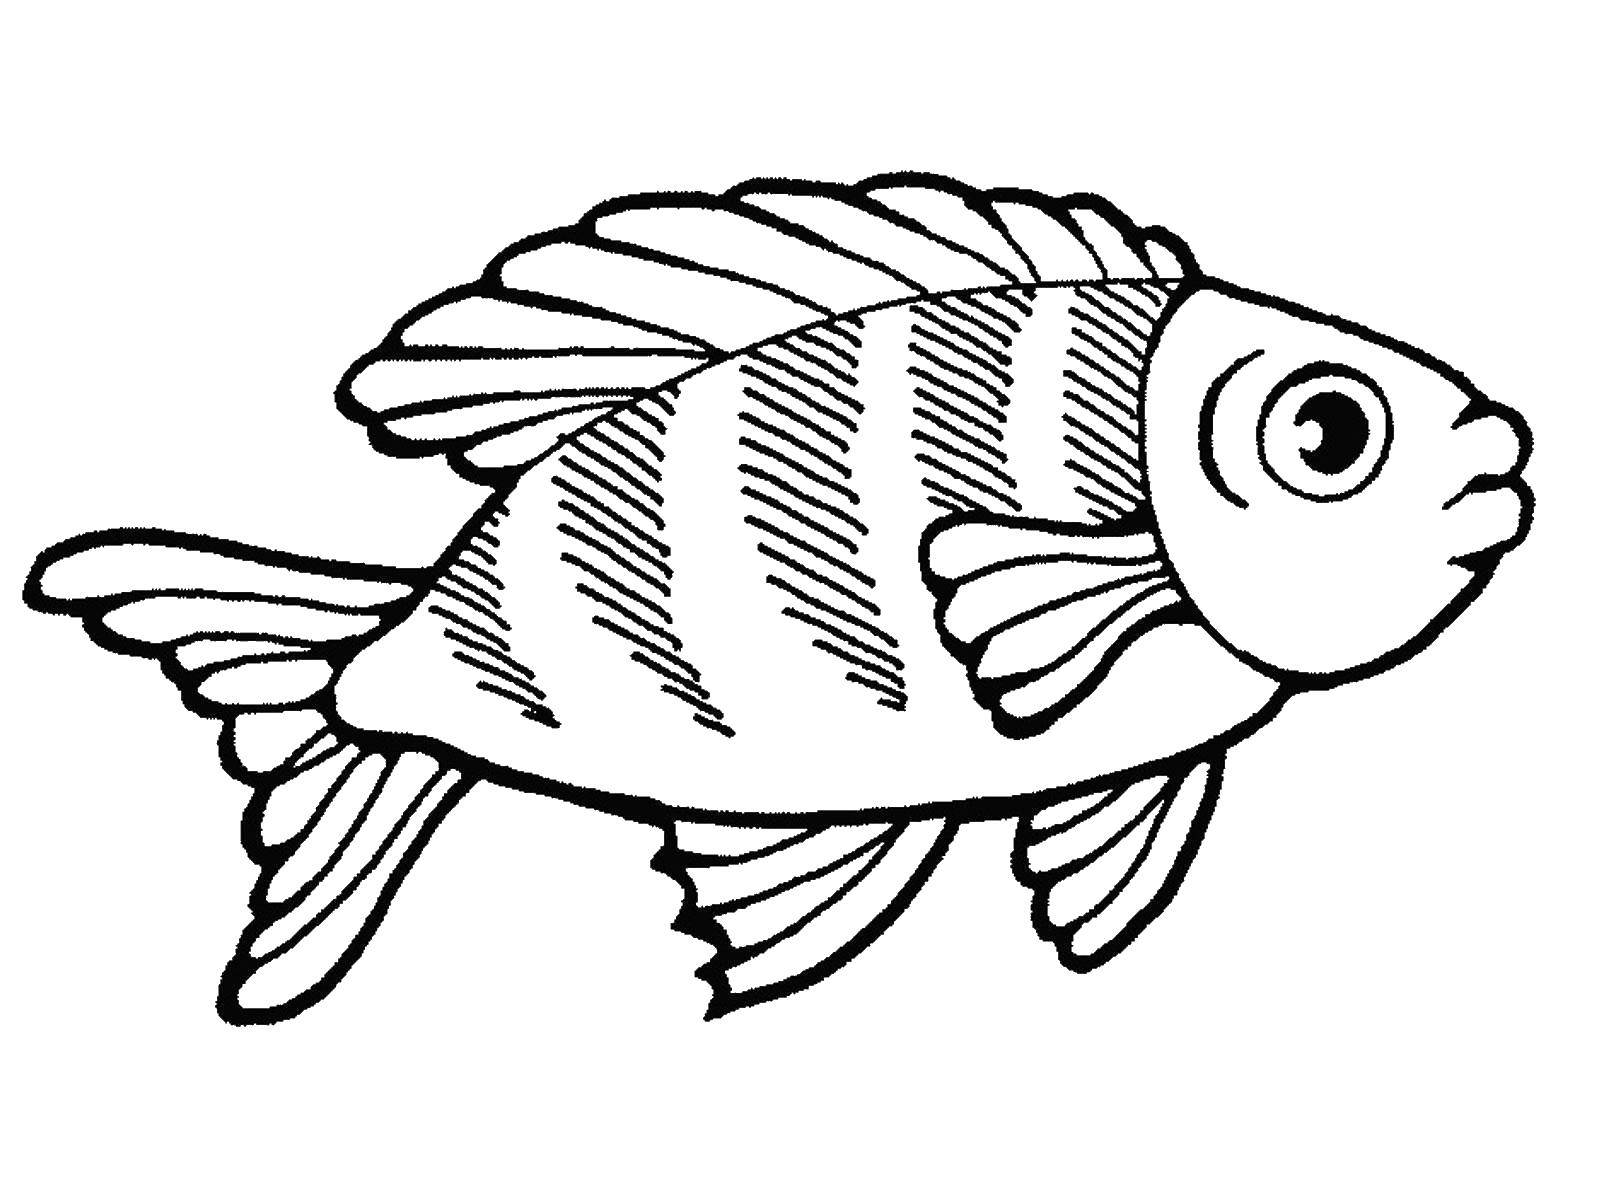  Ихтиология — наука о рыбах